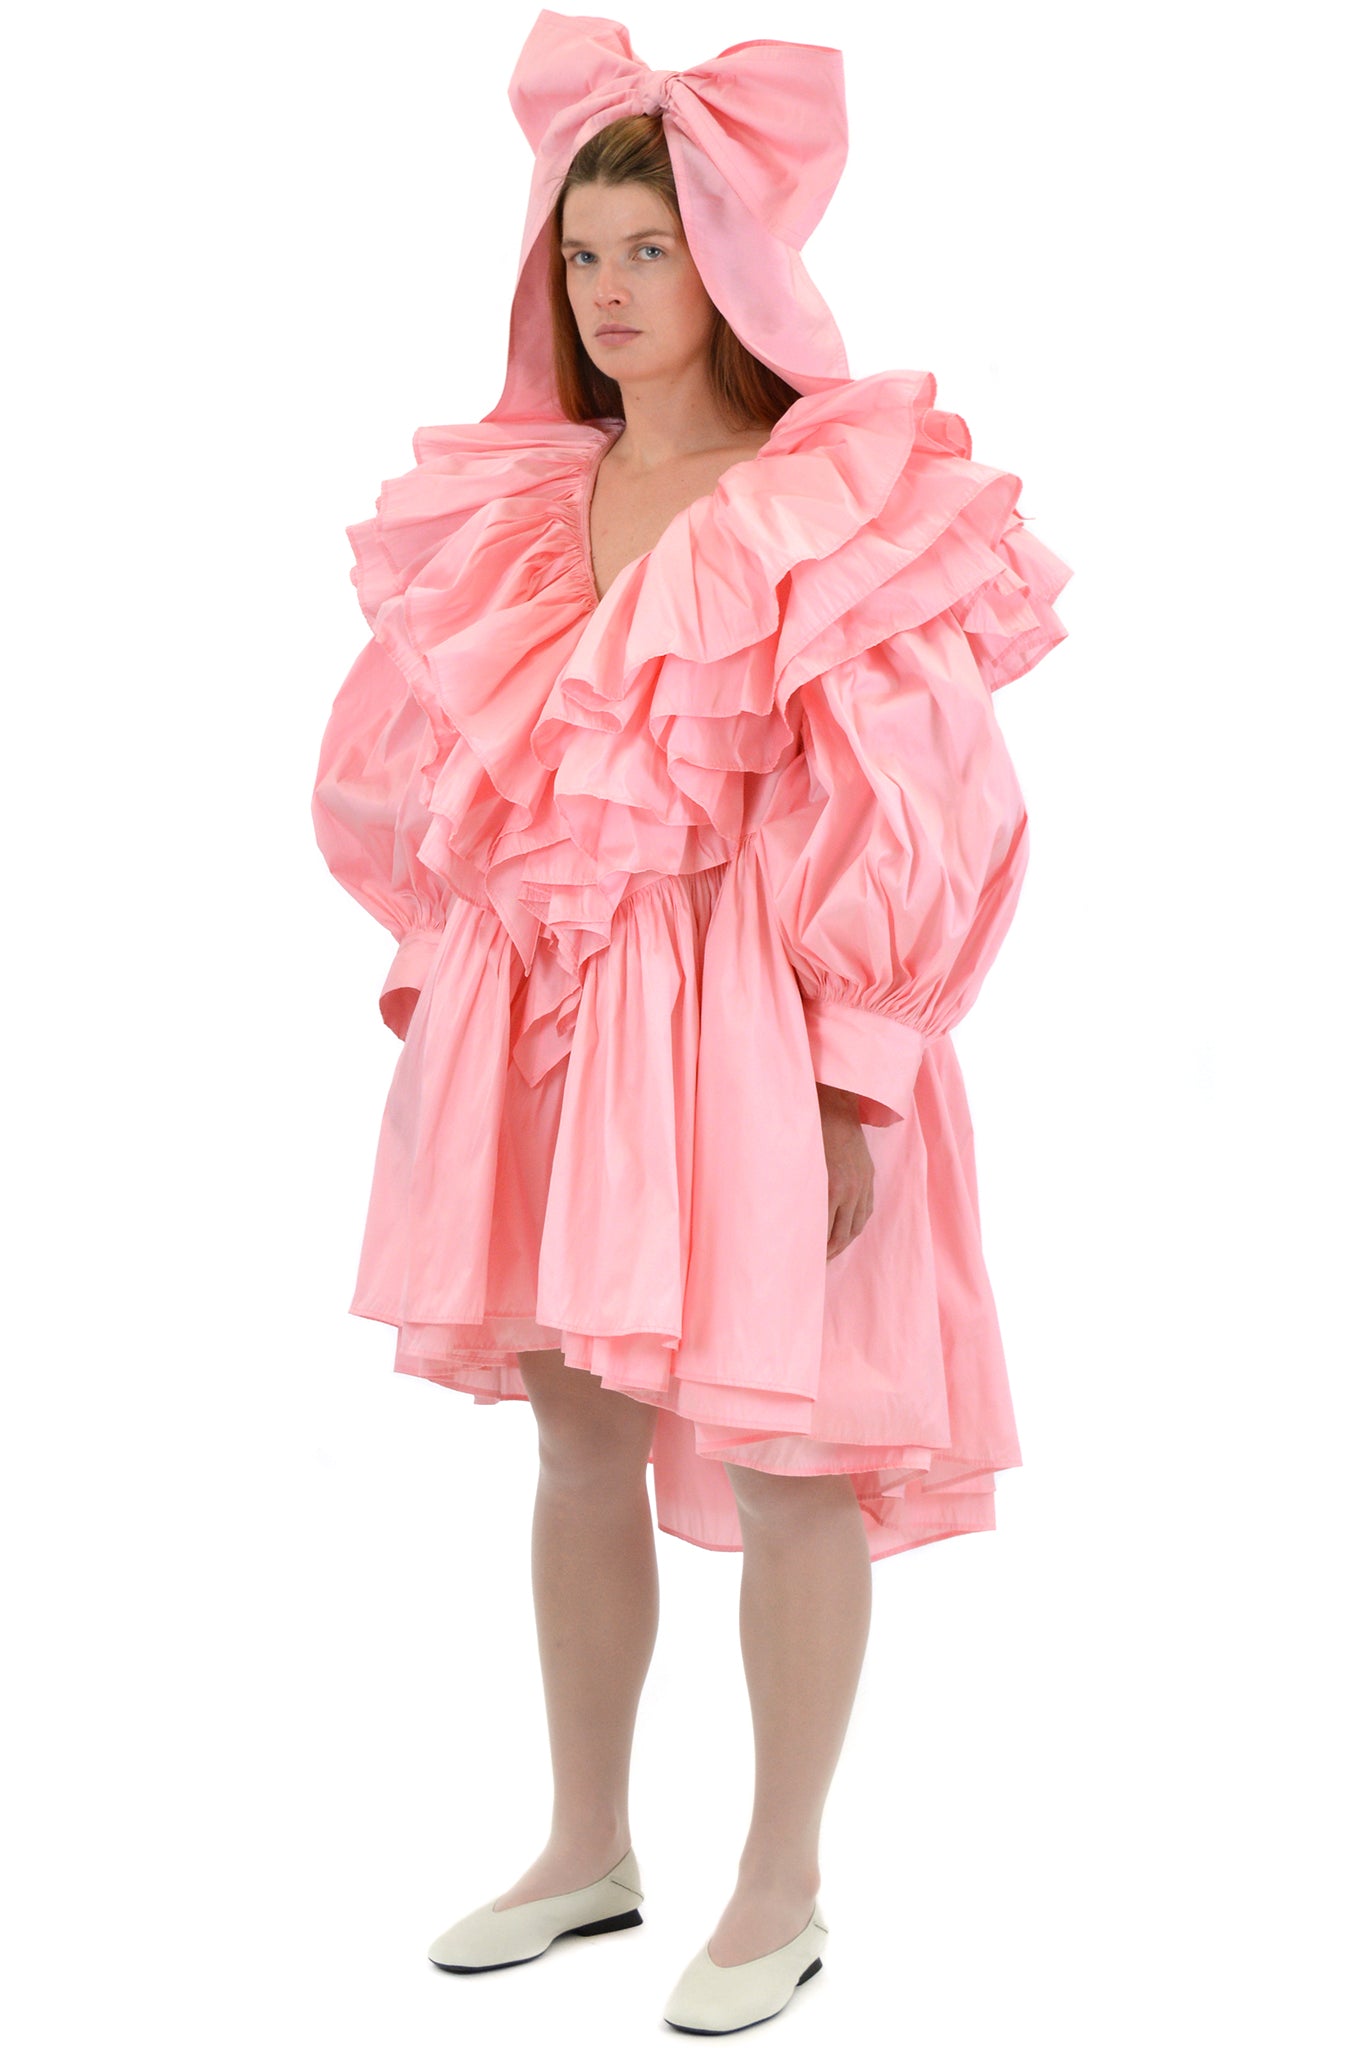 Vaquera Party Dress, Pink